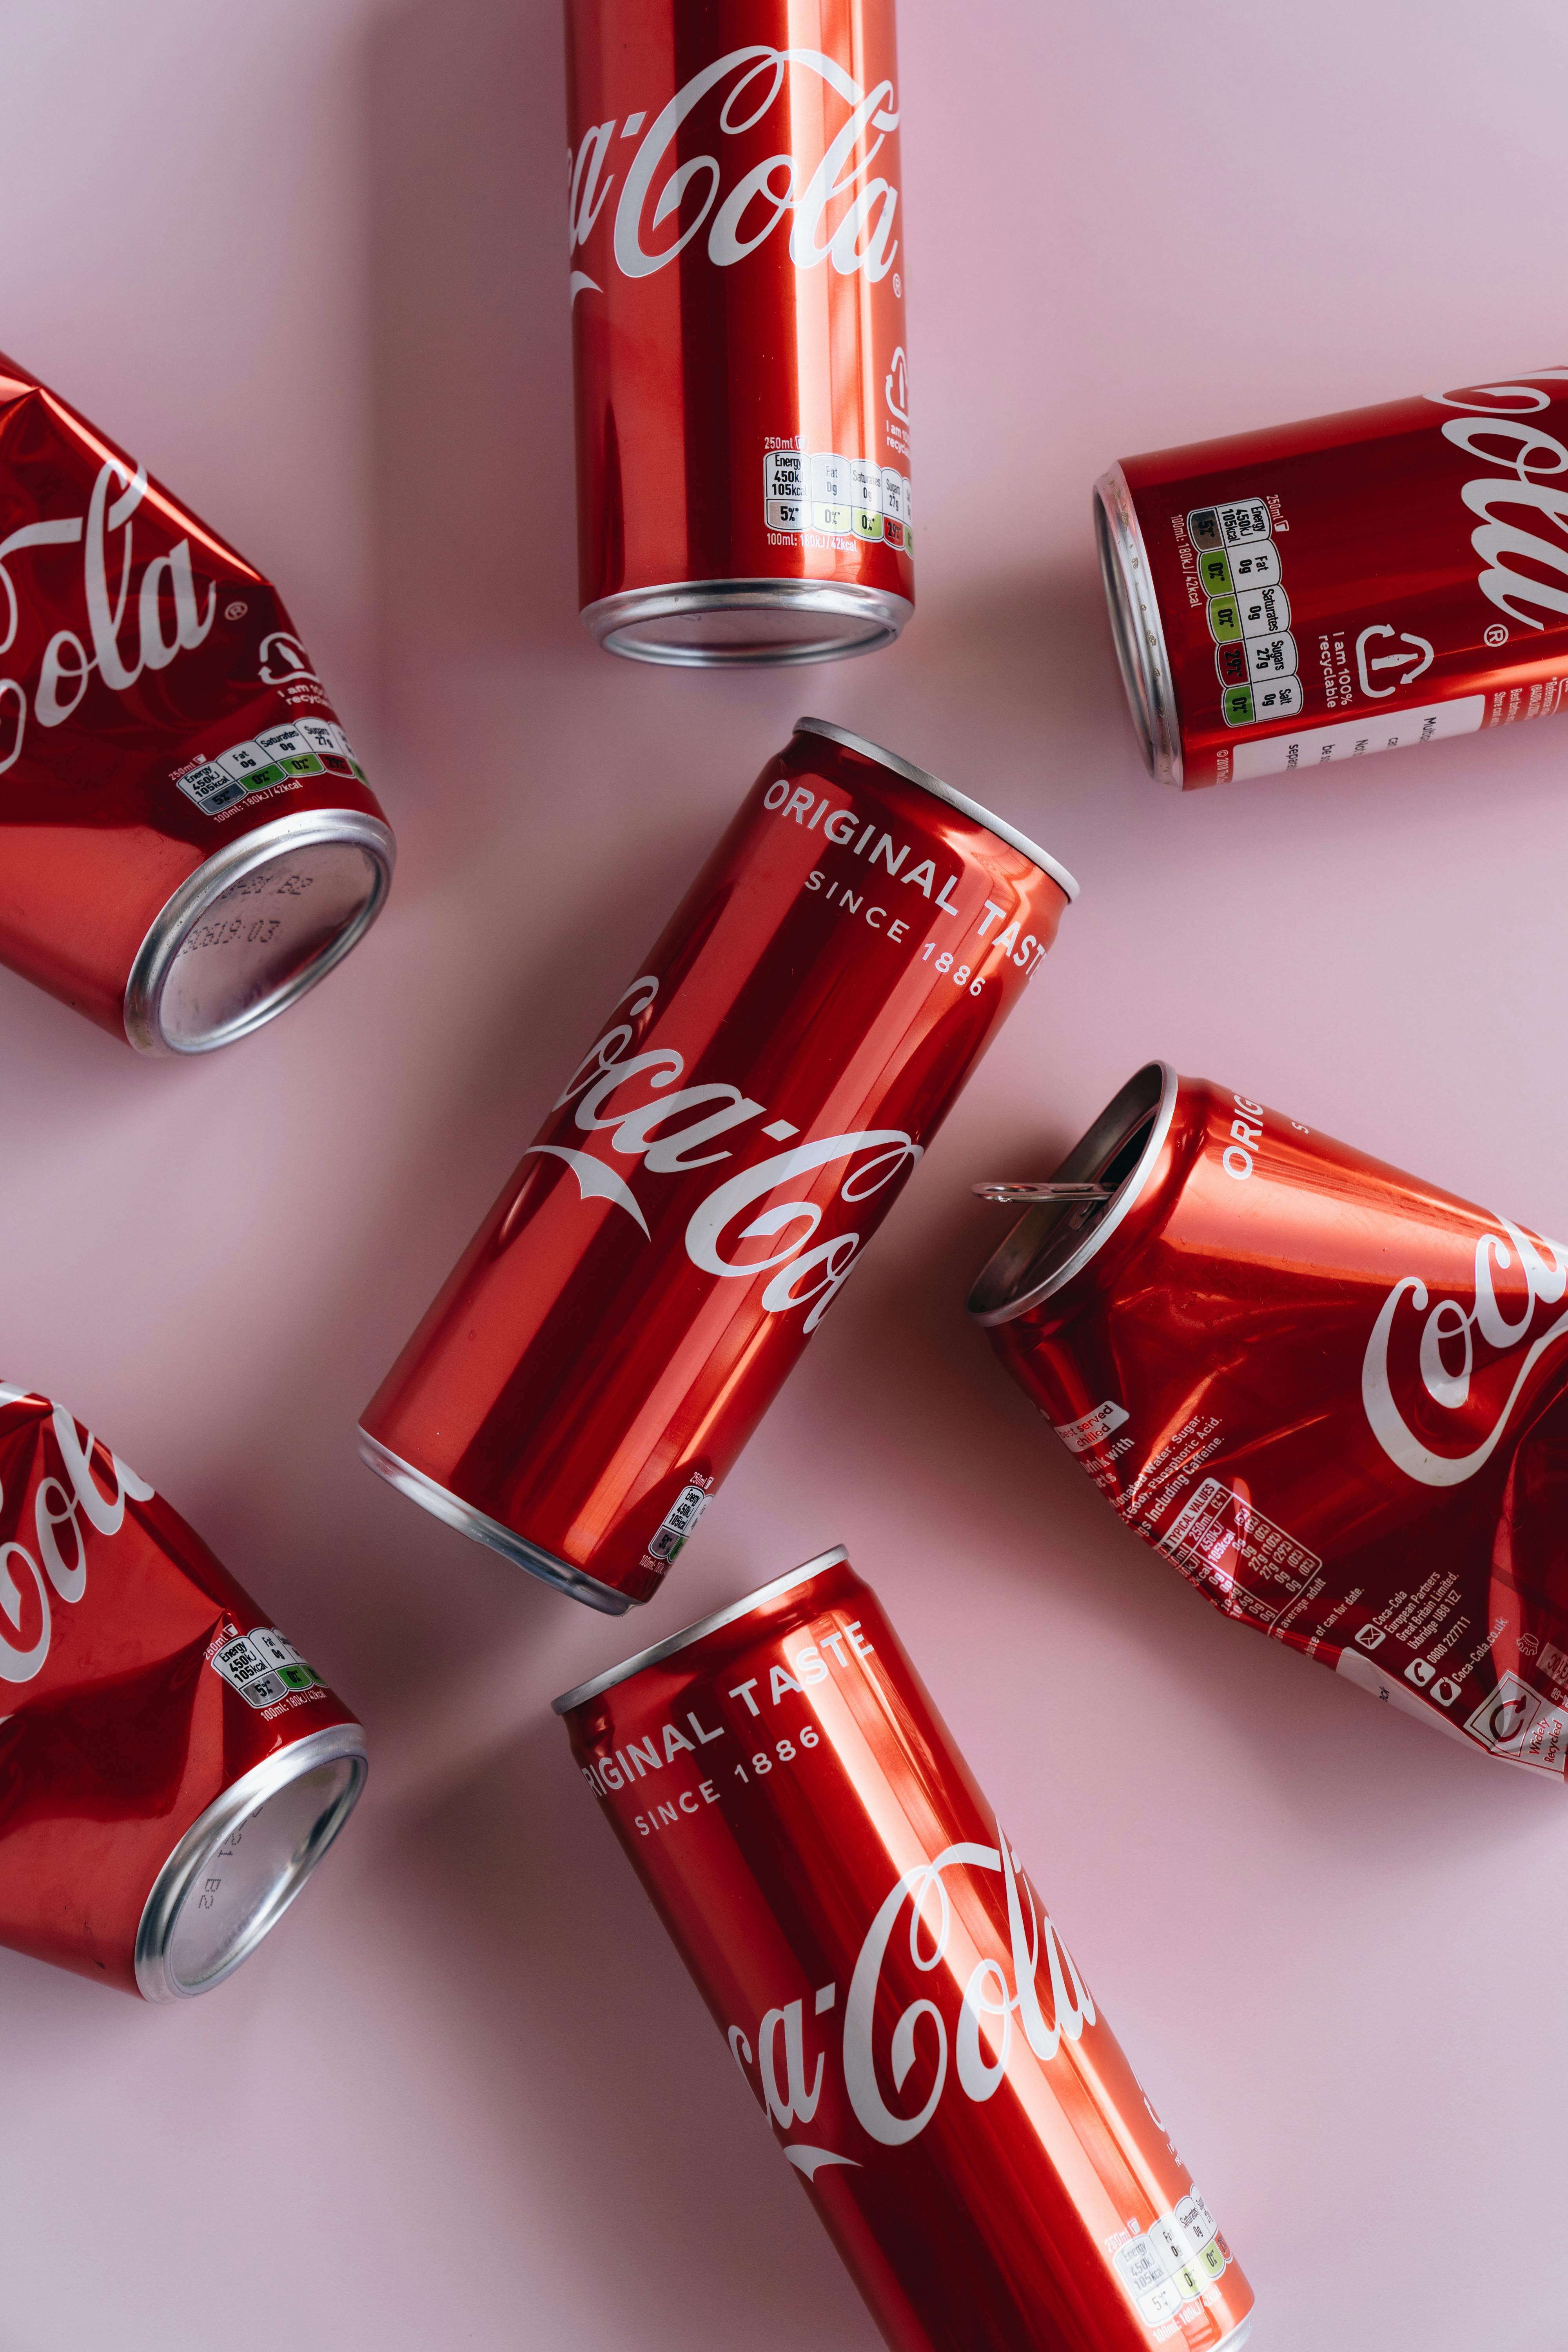 582 Coca Cola Wallpaper Images, Stock Photos & Vectors | Shutterstock